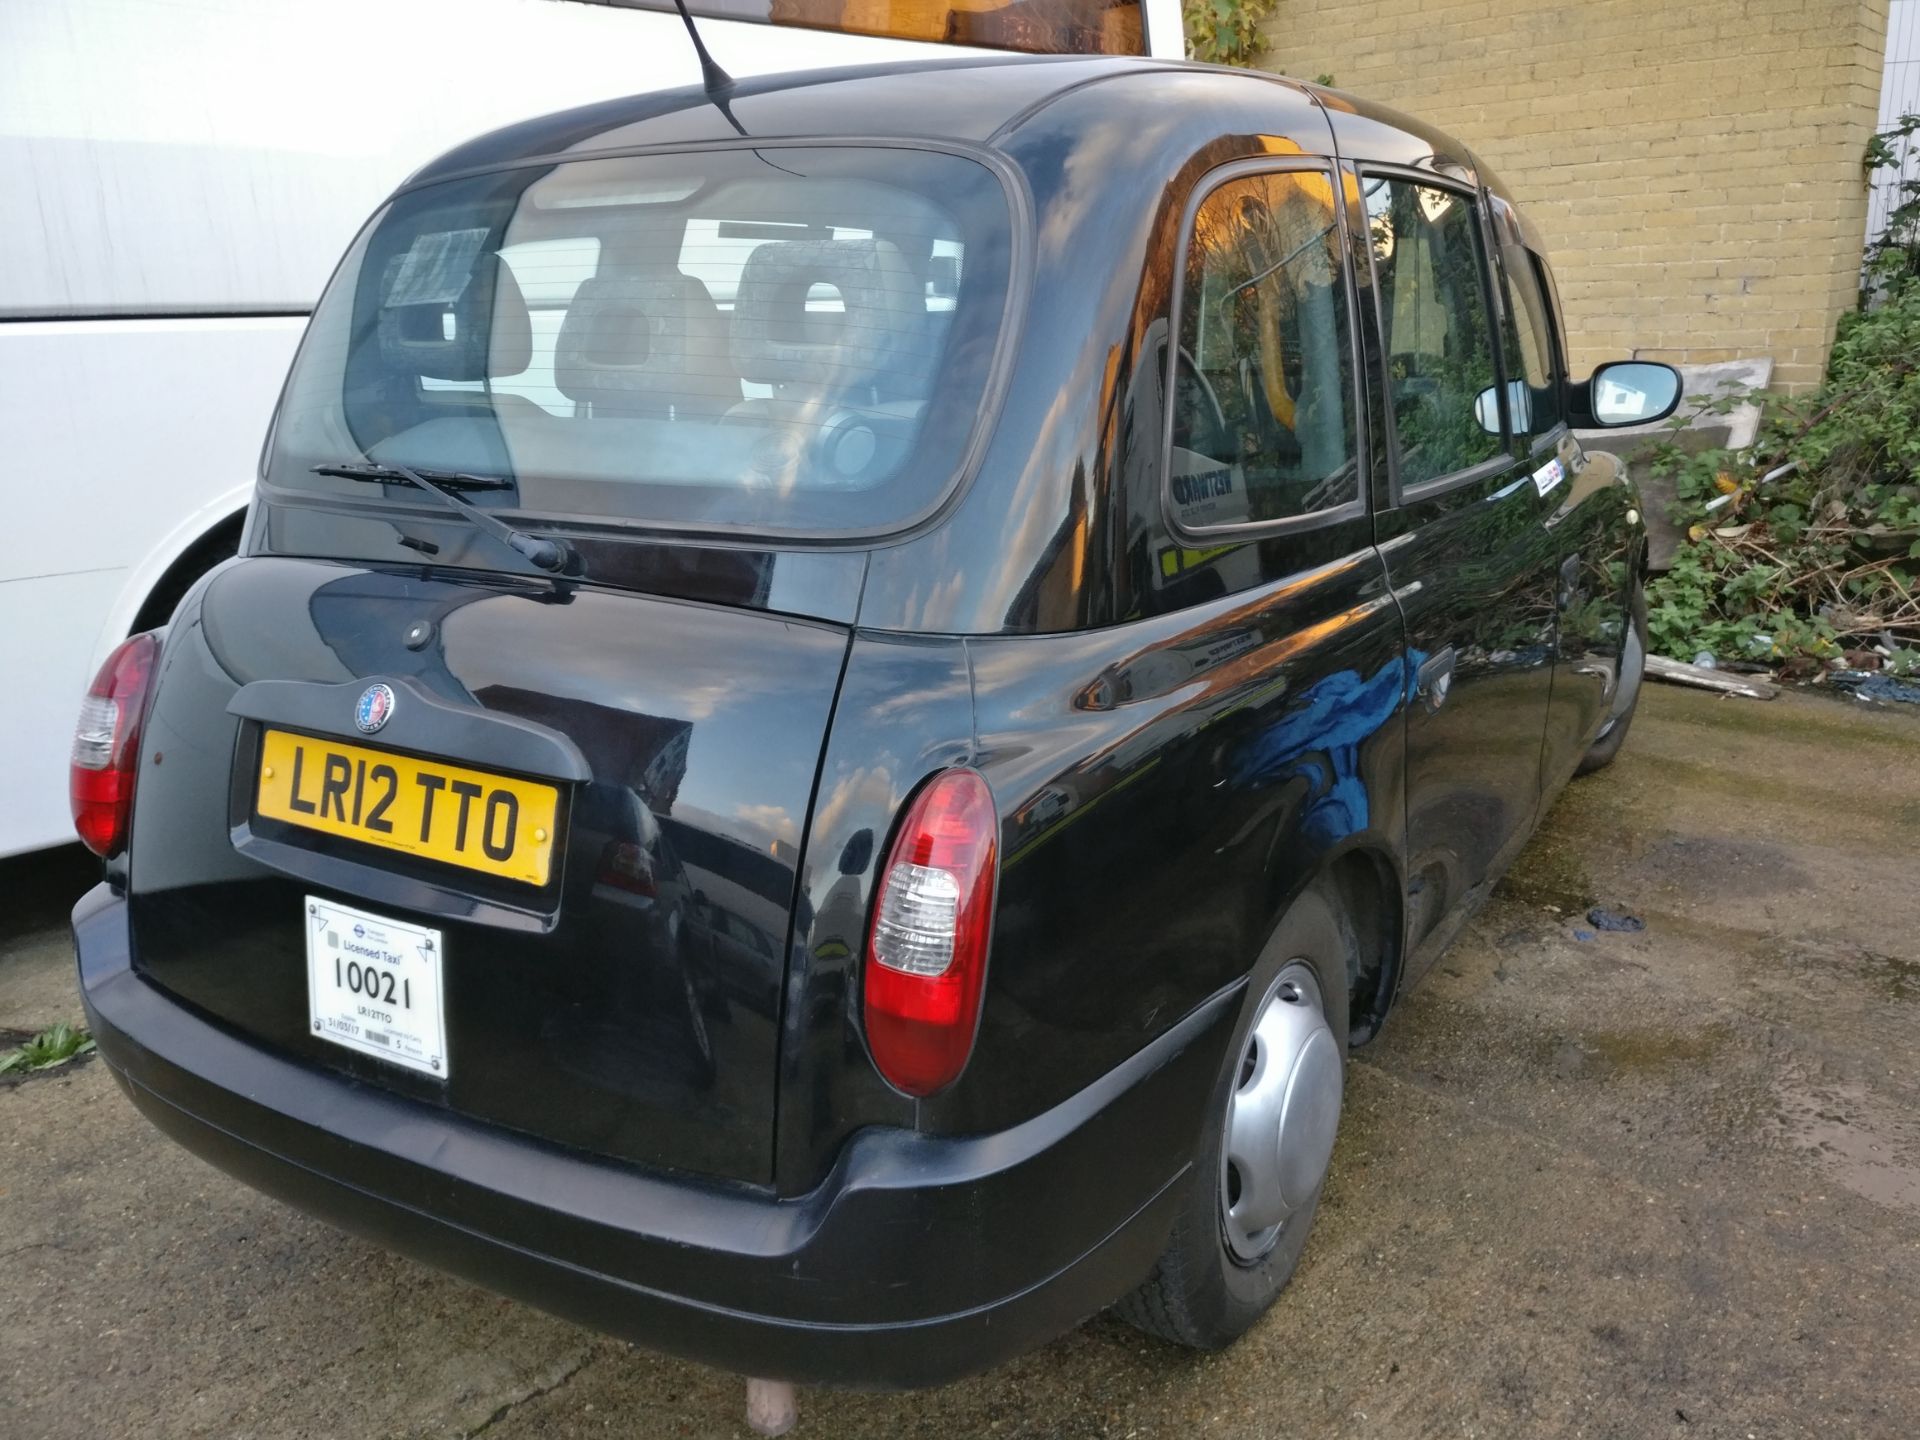 * 2012 London Taxis International FX4 Auto ''Black Cab'', Reg LR12 TTO, ?miles, MOT expired 30 March - Image 4 of 6